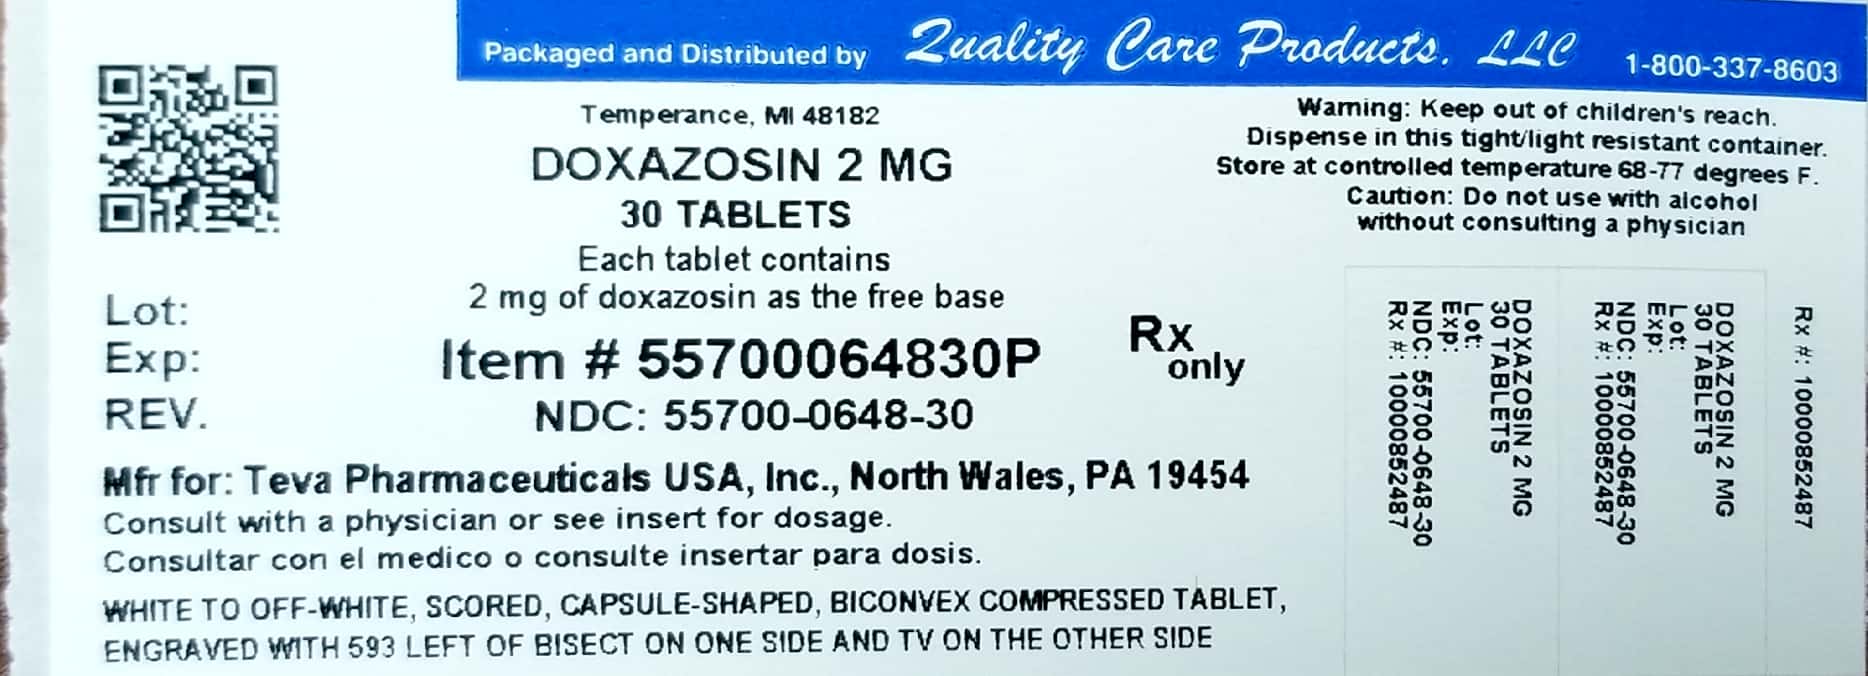 doxazosin mesylate brand and generic name